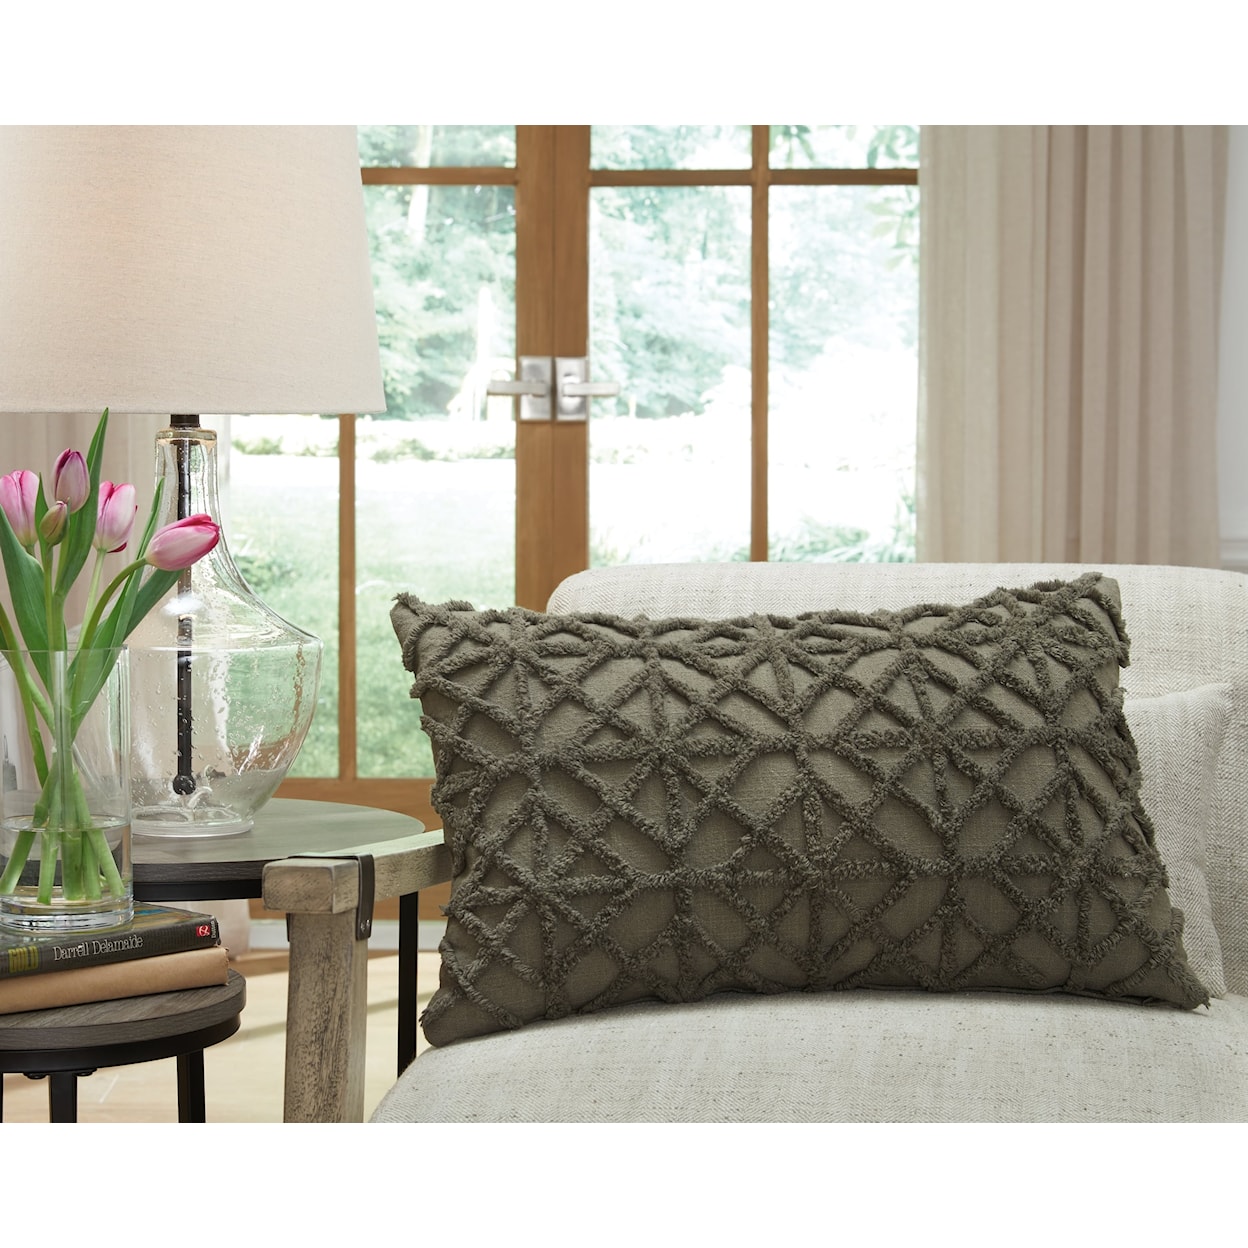 Ashley Furniture Signature Design Finnbrook Pillow (Set of 4)